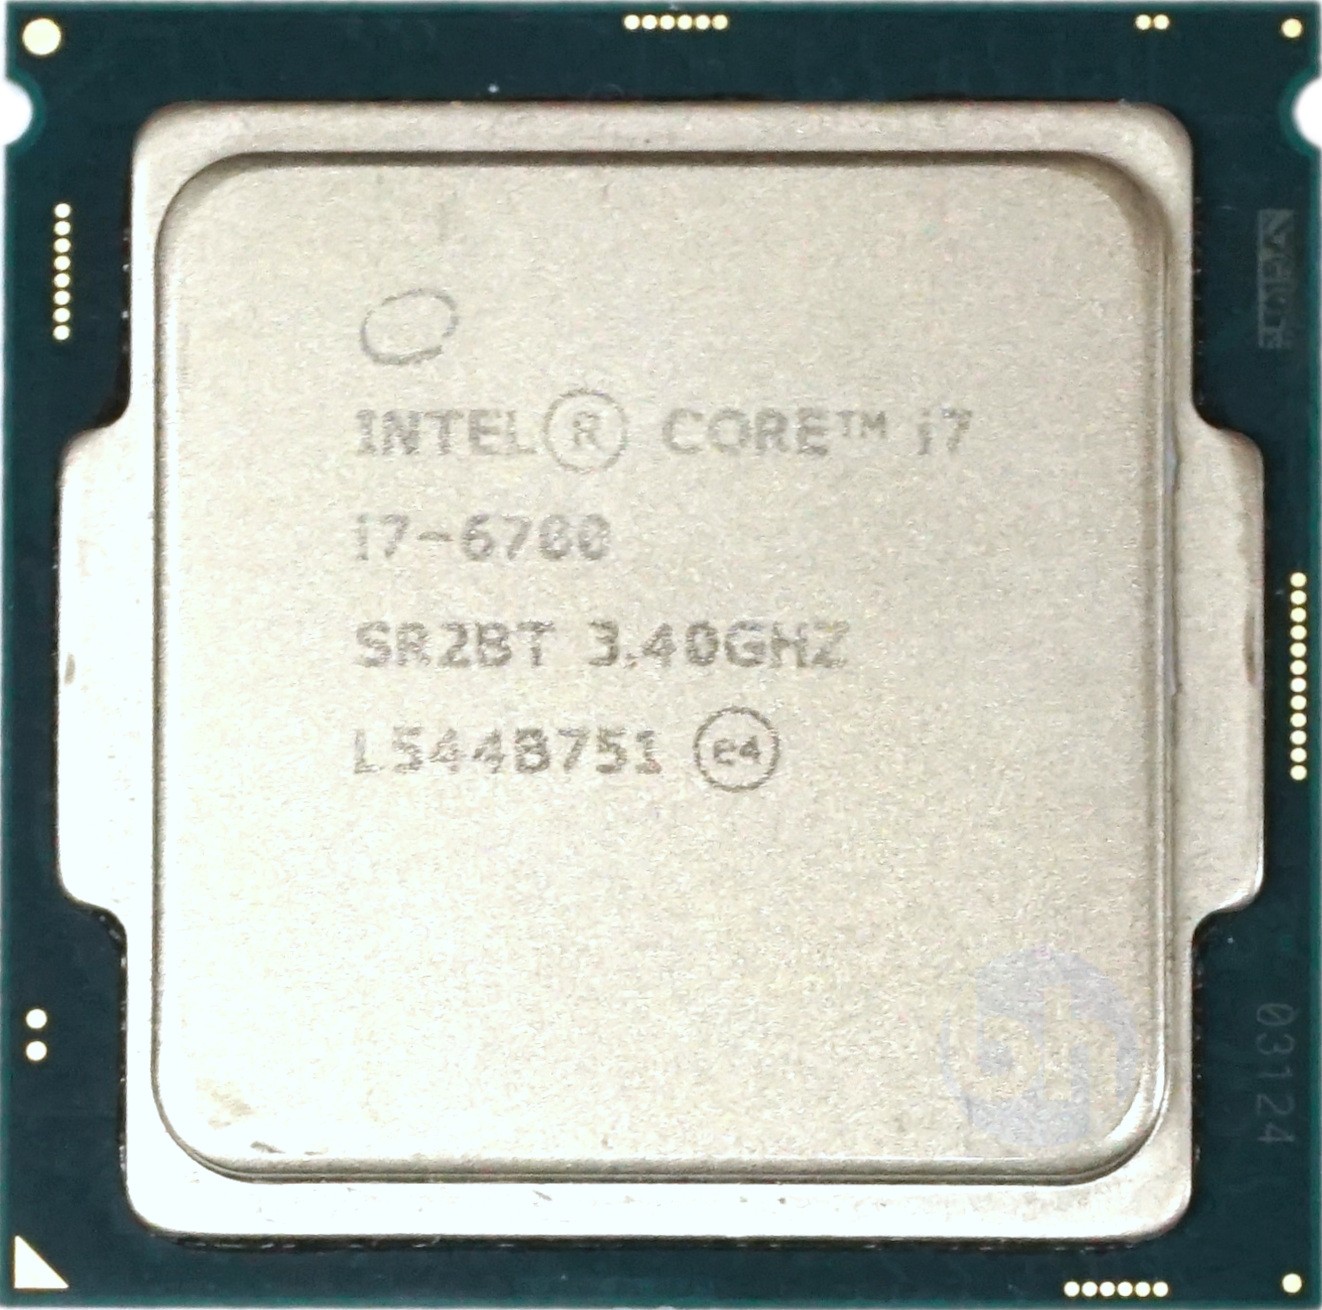 Intel Core i7-6700 (SR2BT) 3.40Ghz Quad (4) Core LGA1151 65W 8MB CPU